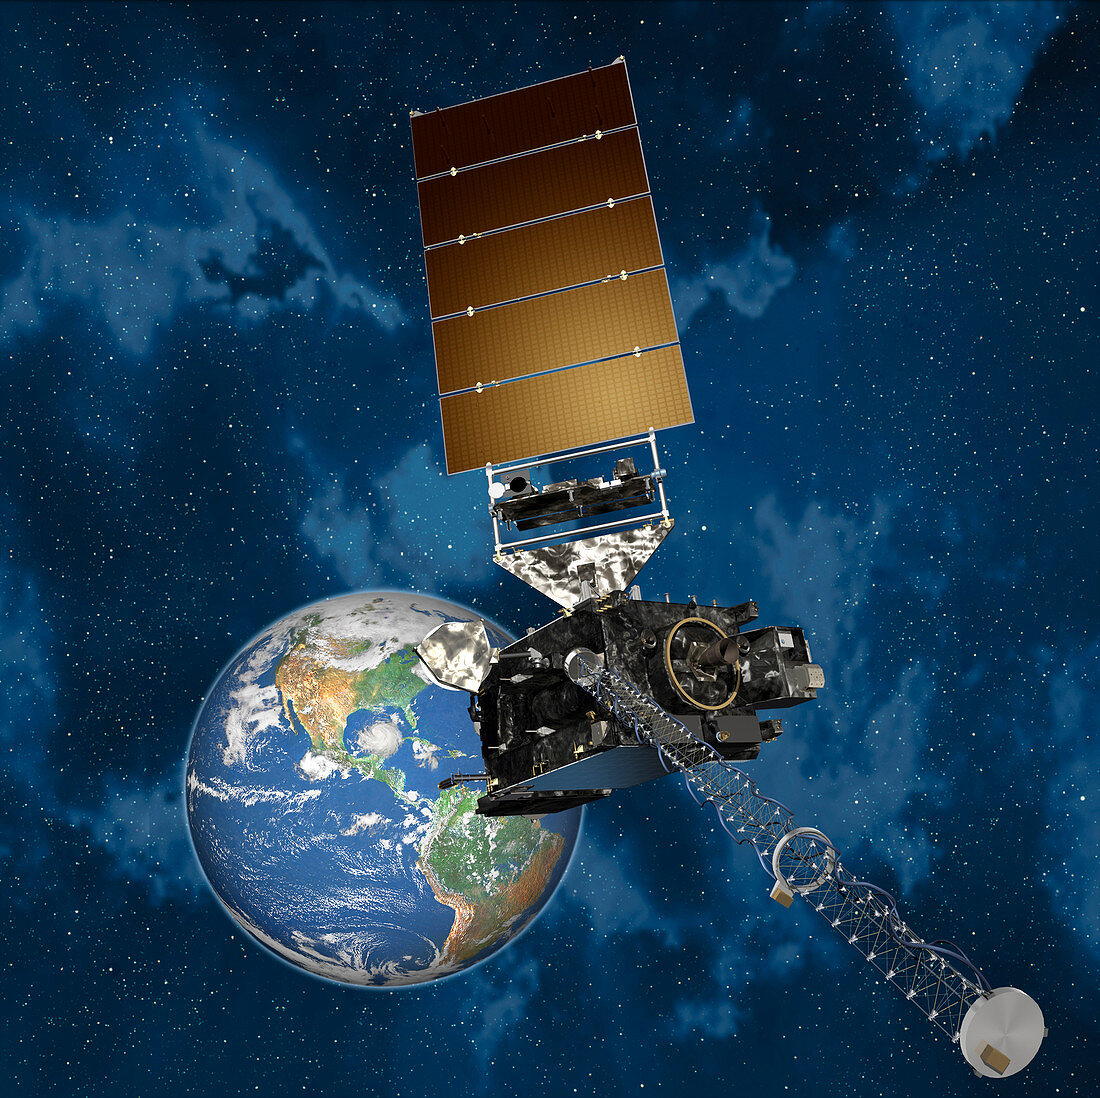 GOES-R satellite in orbit,illustration